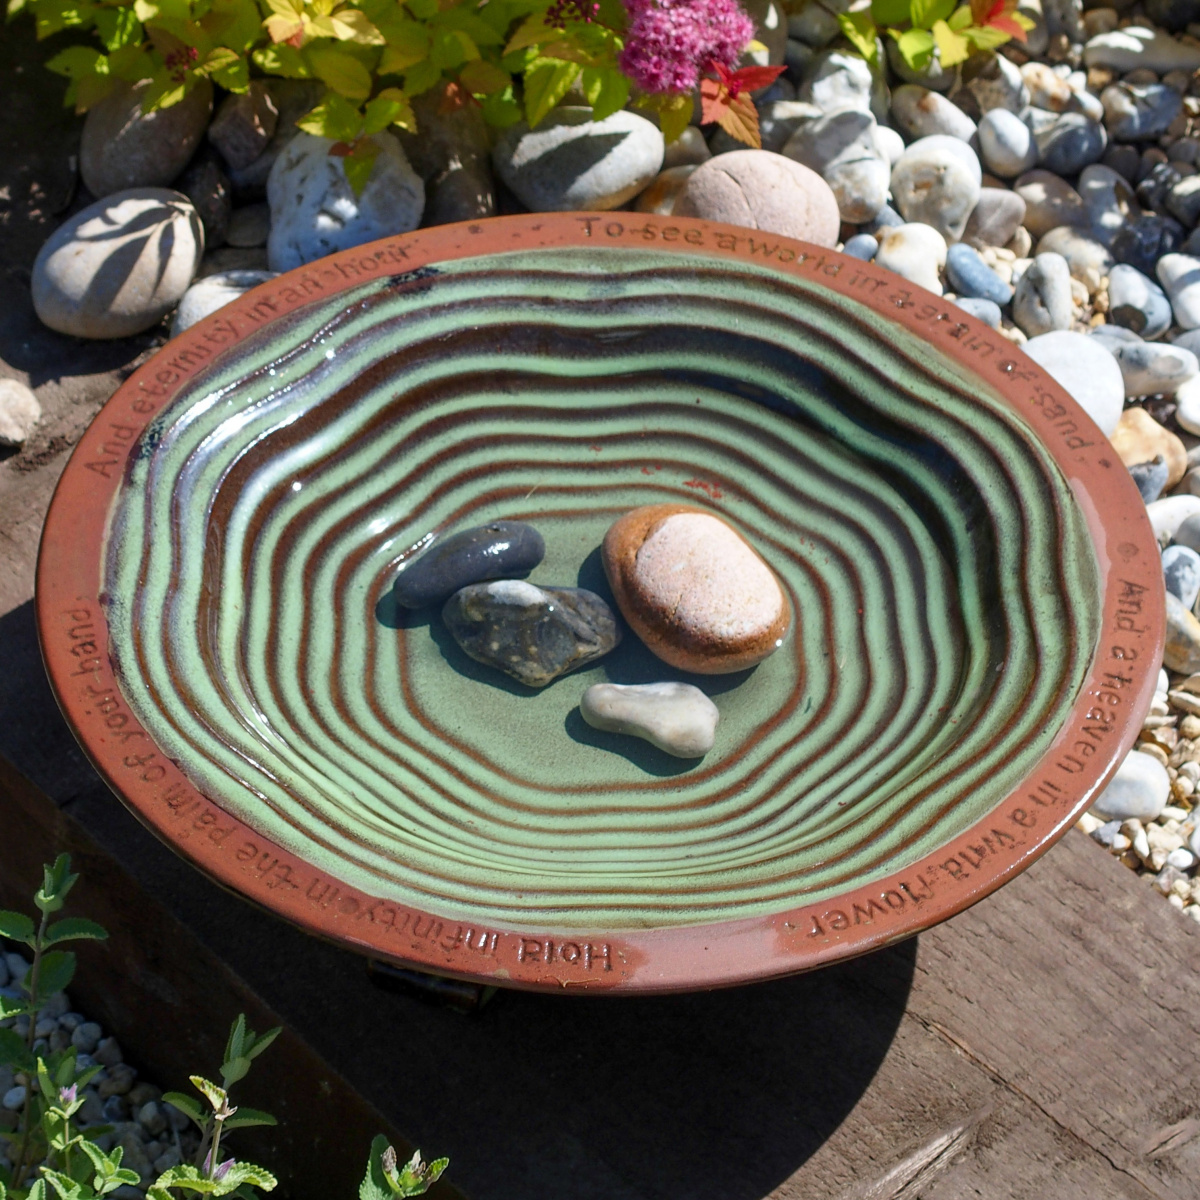 Wildlife World grønt fuglebad keramik